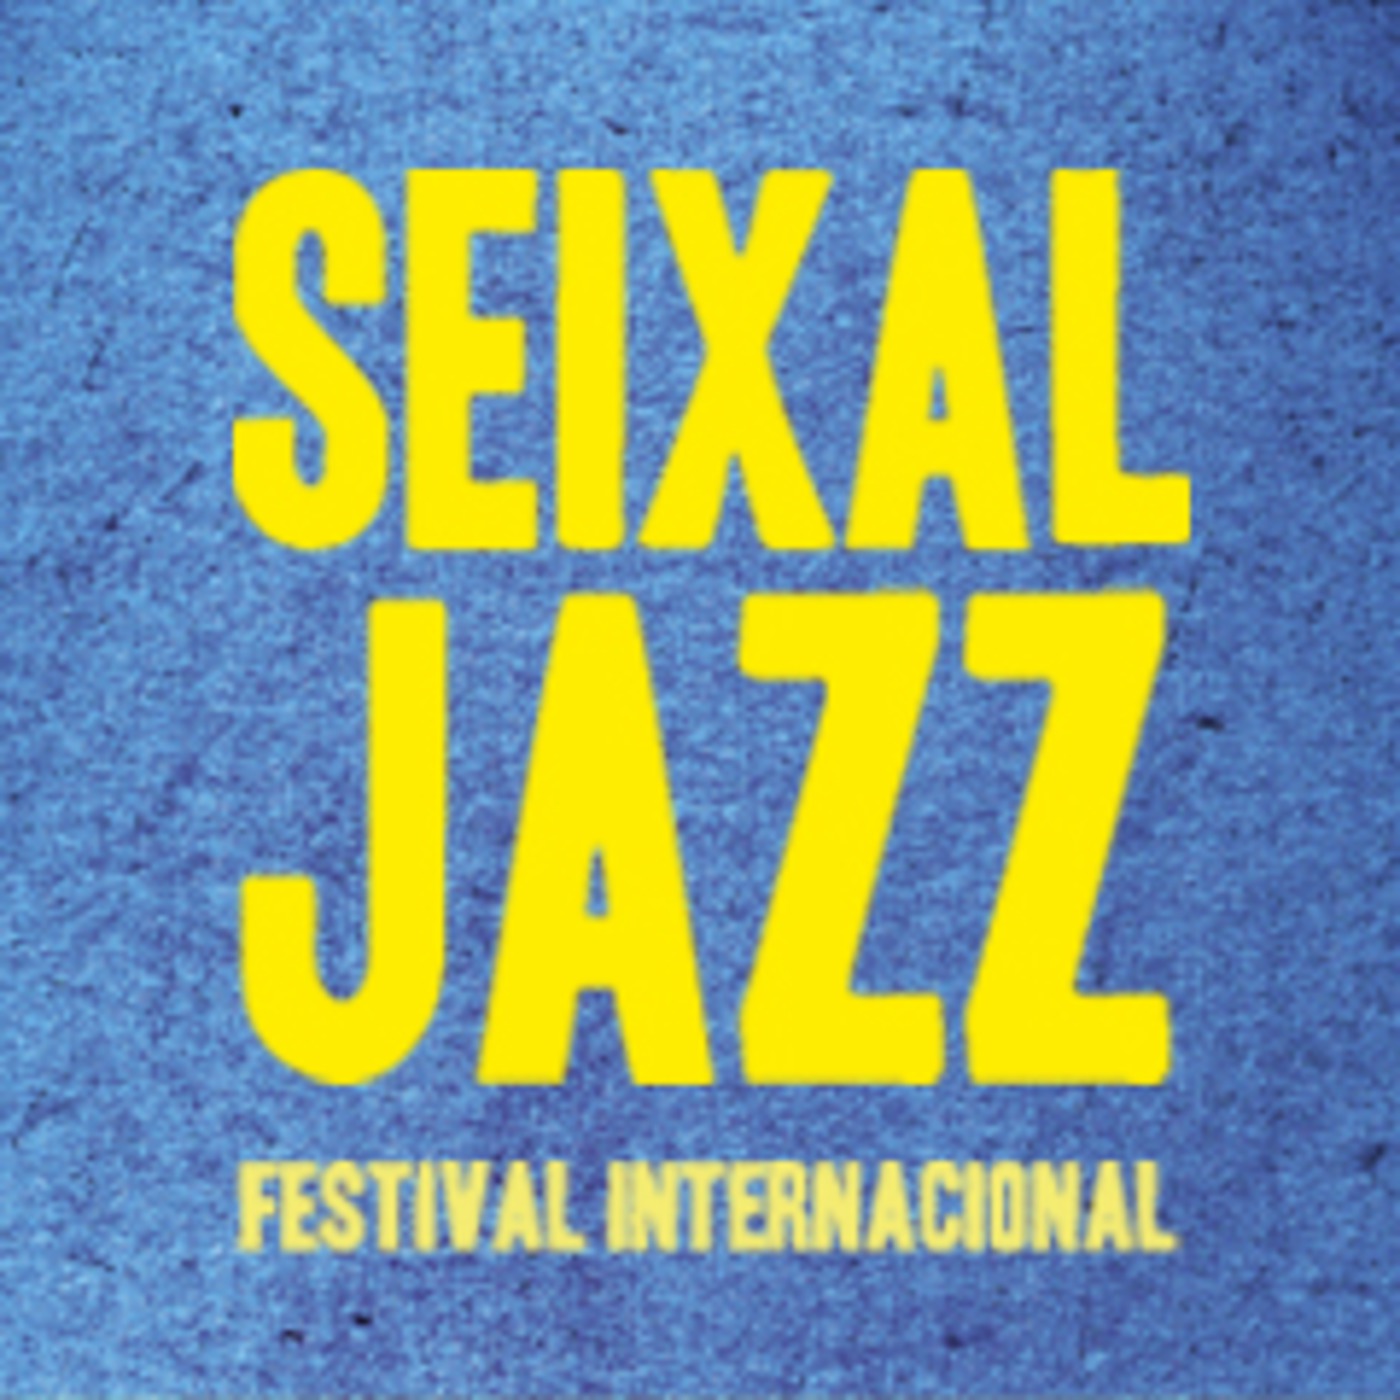 Festival Internacional SeixalJazz